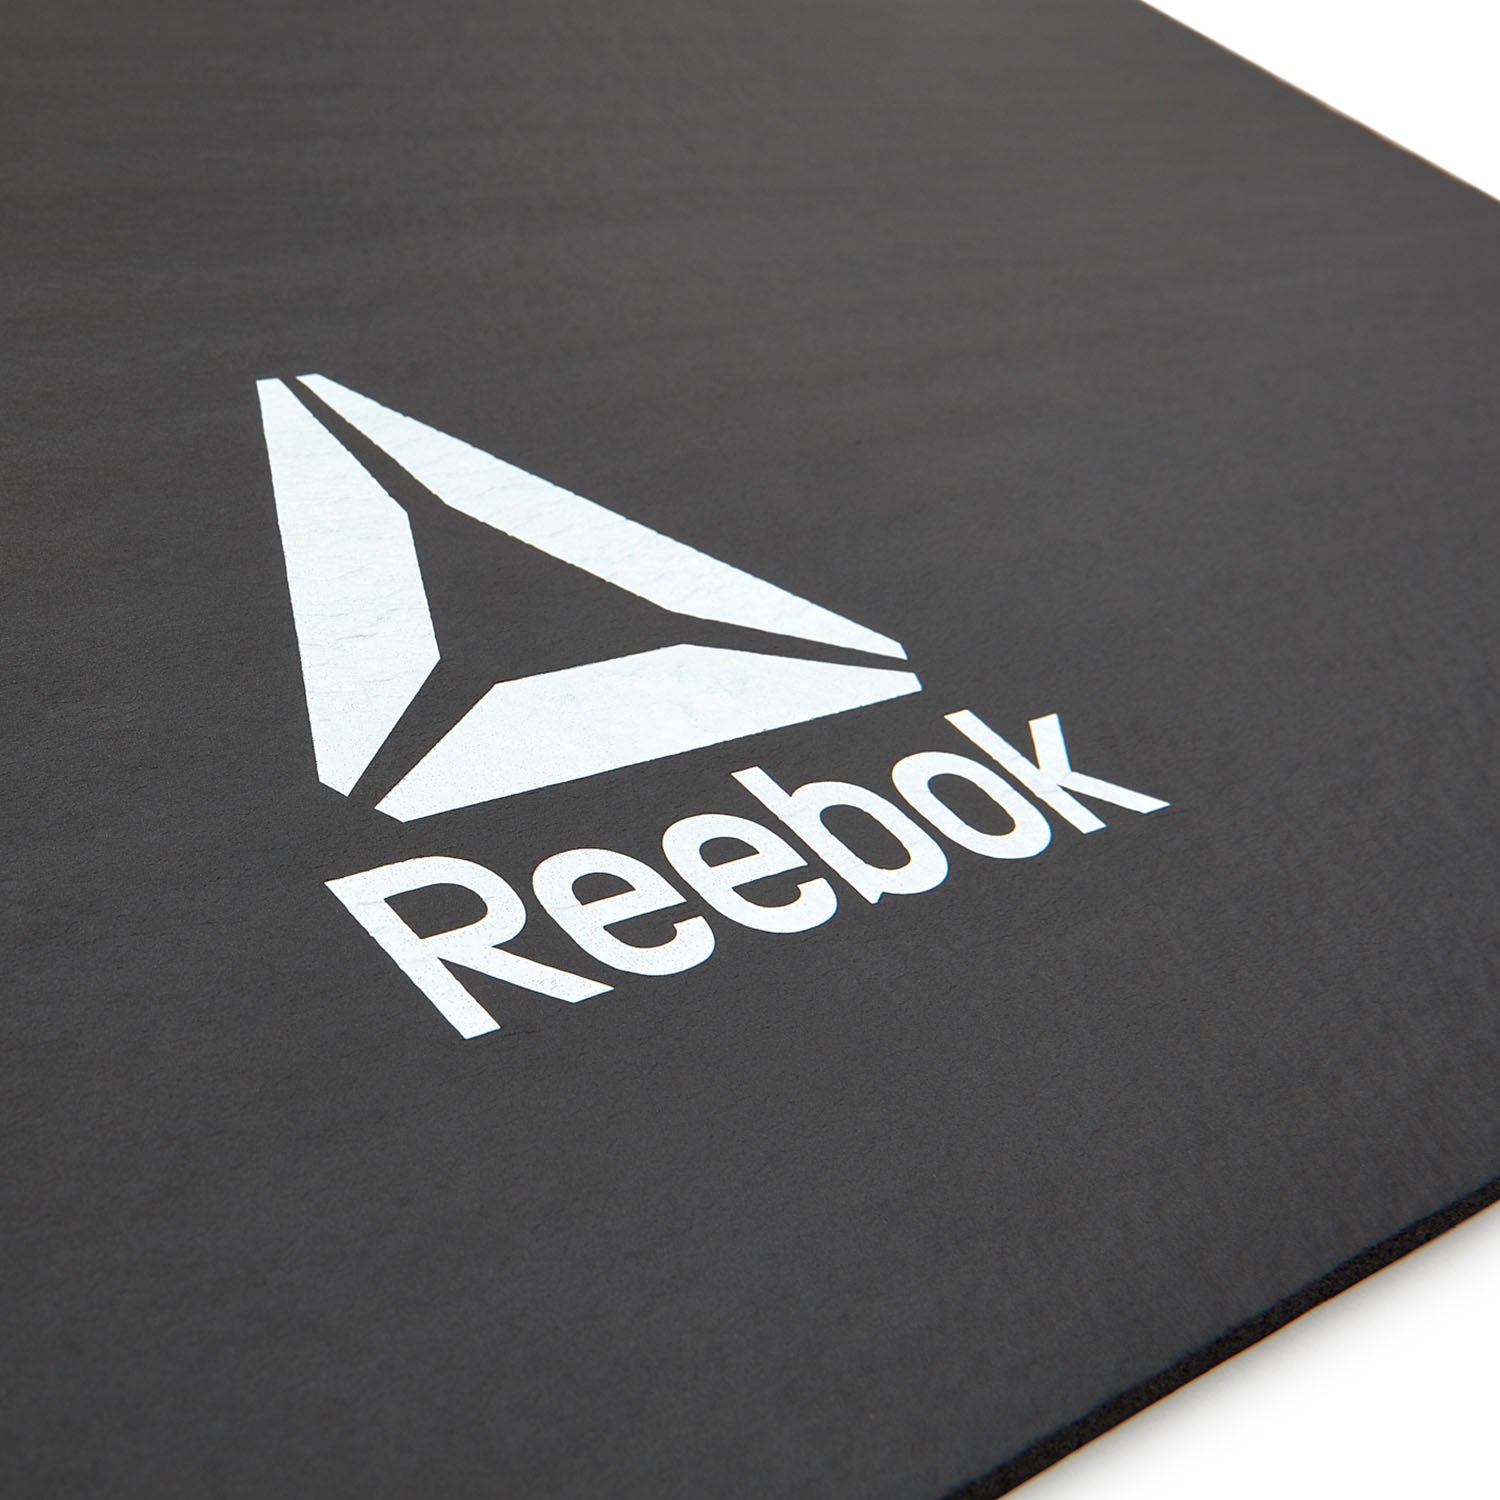 Reebok Training Mat 1.73m*0.61m*7mm in Black